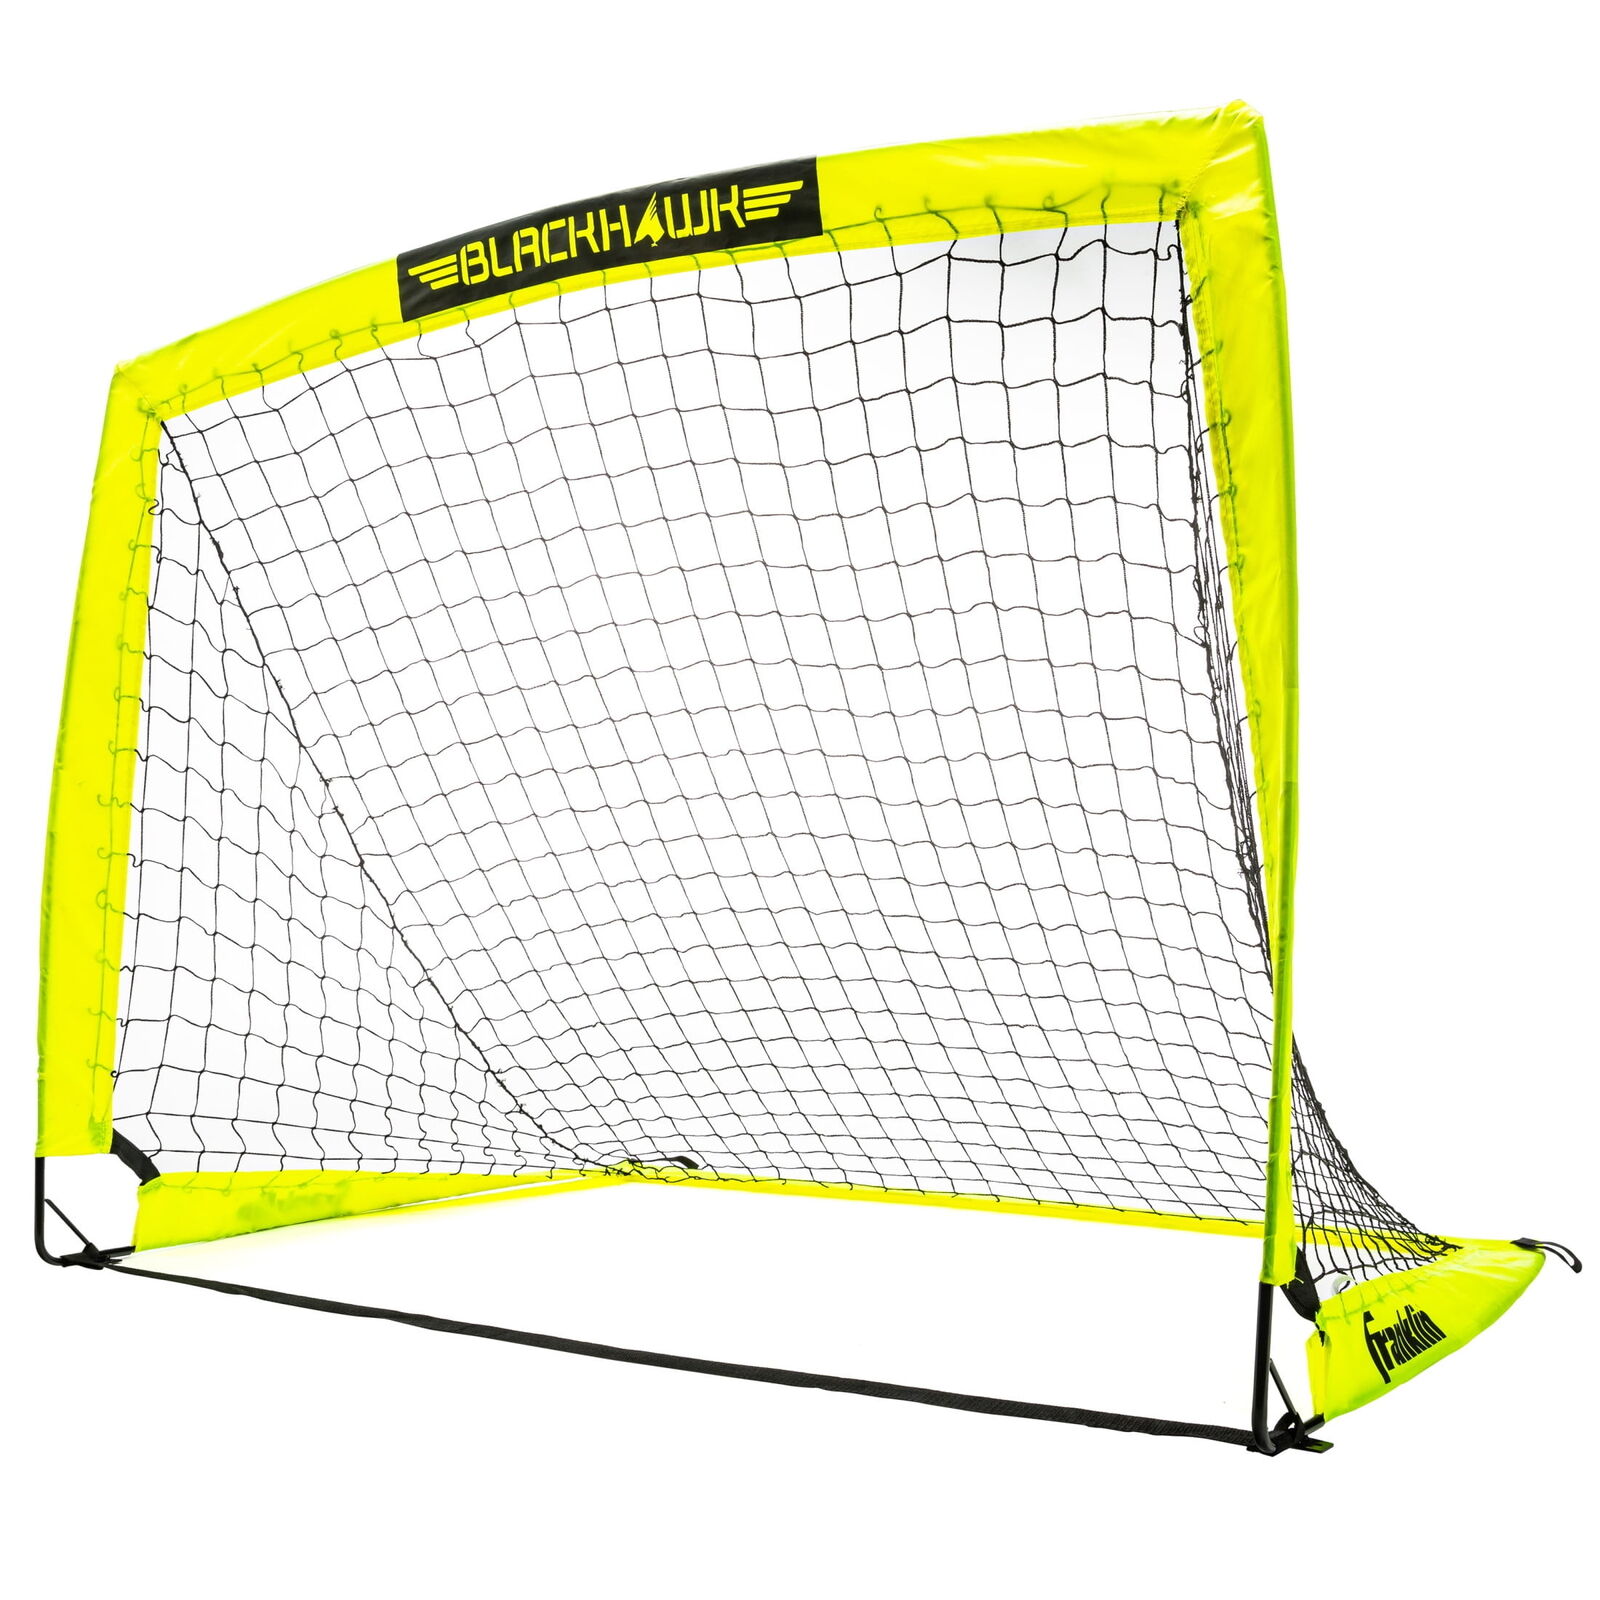 Blackhawk Soccer Goal - Up Backyard Soccer Nets - Foldable Indoor